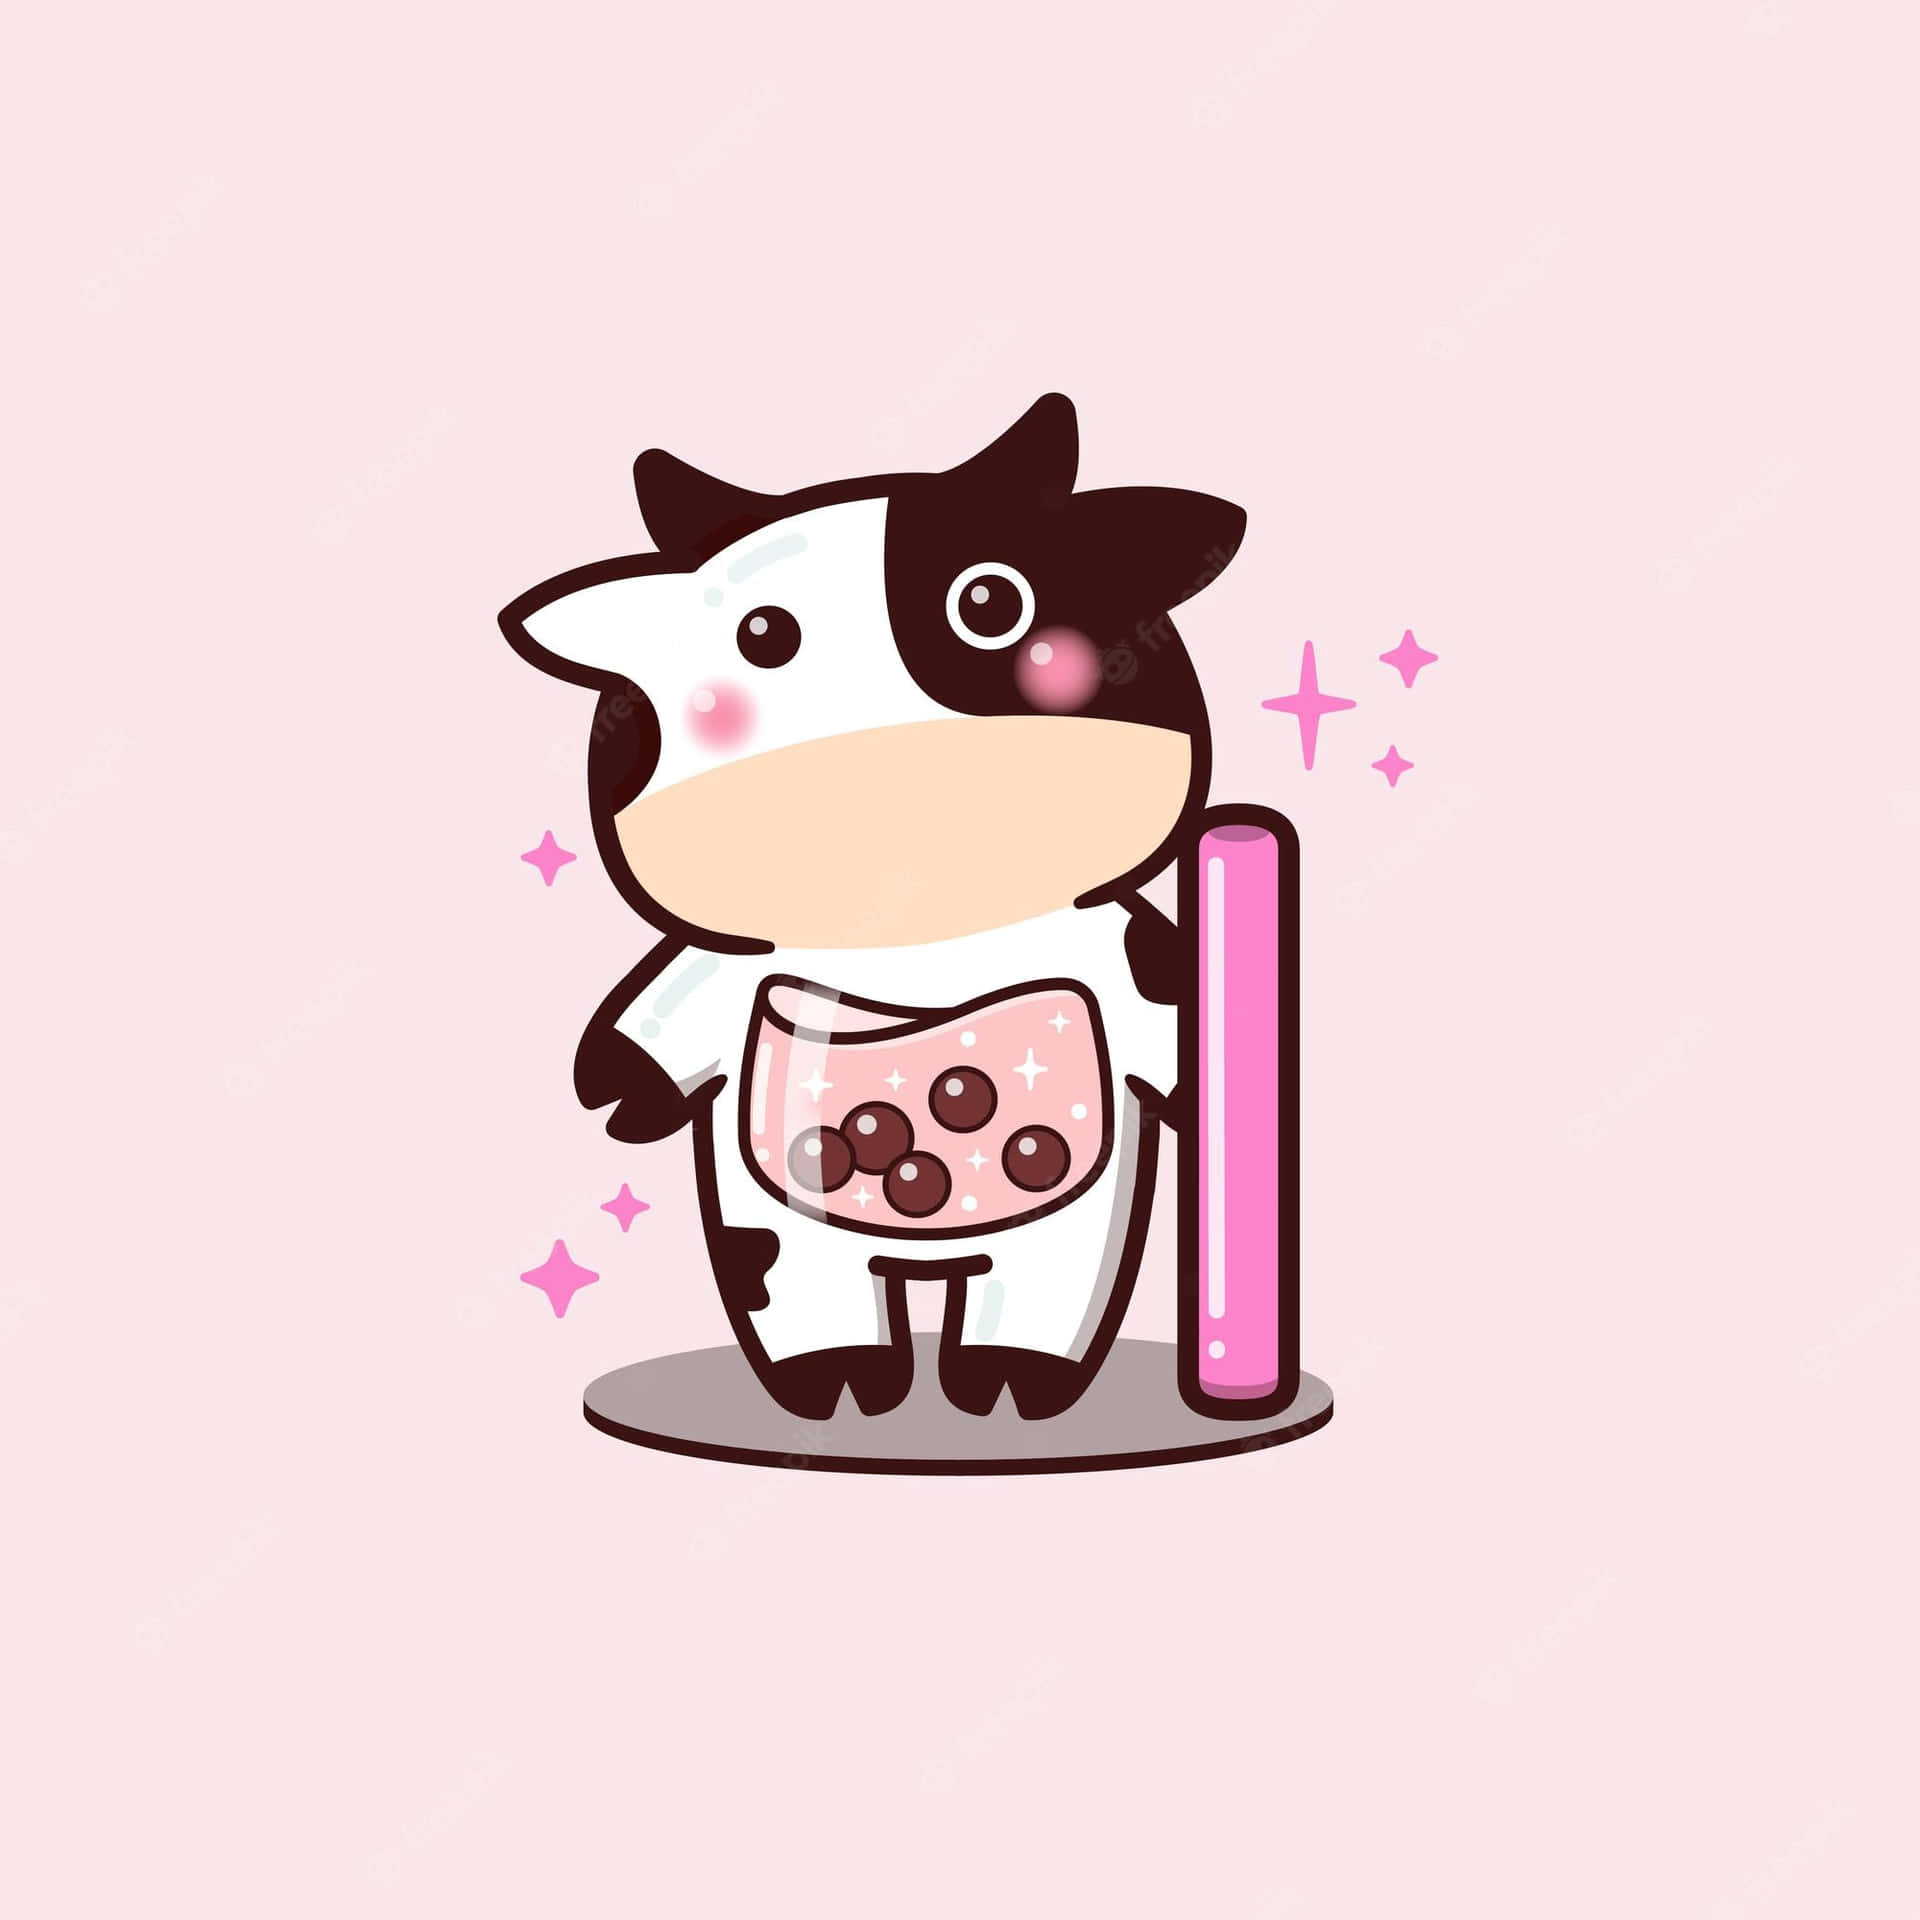 Kawaii Cow: A Sweet and Cute Mascot Wallpaper